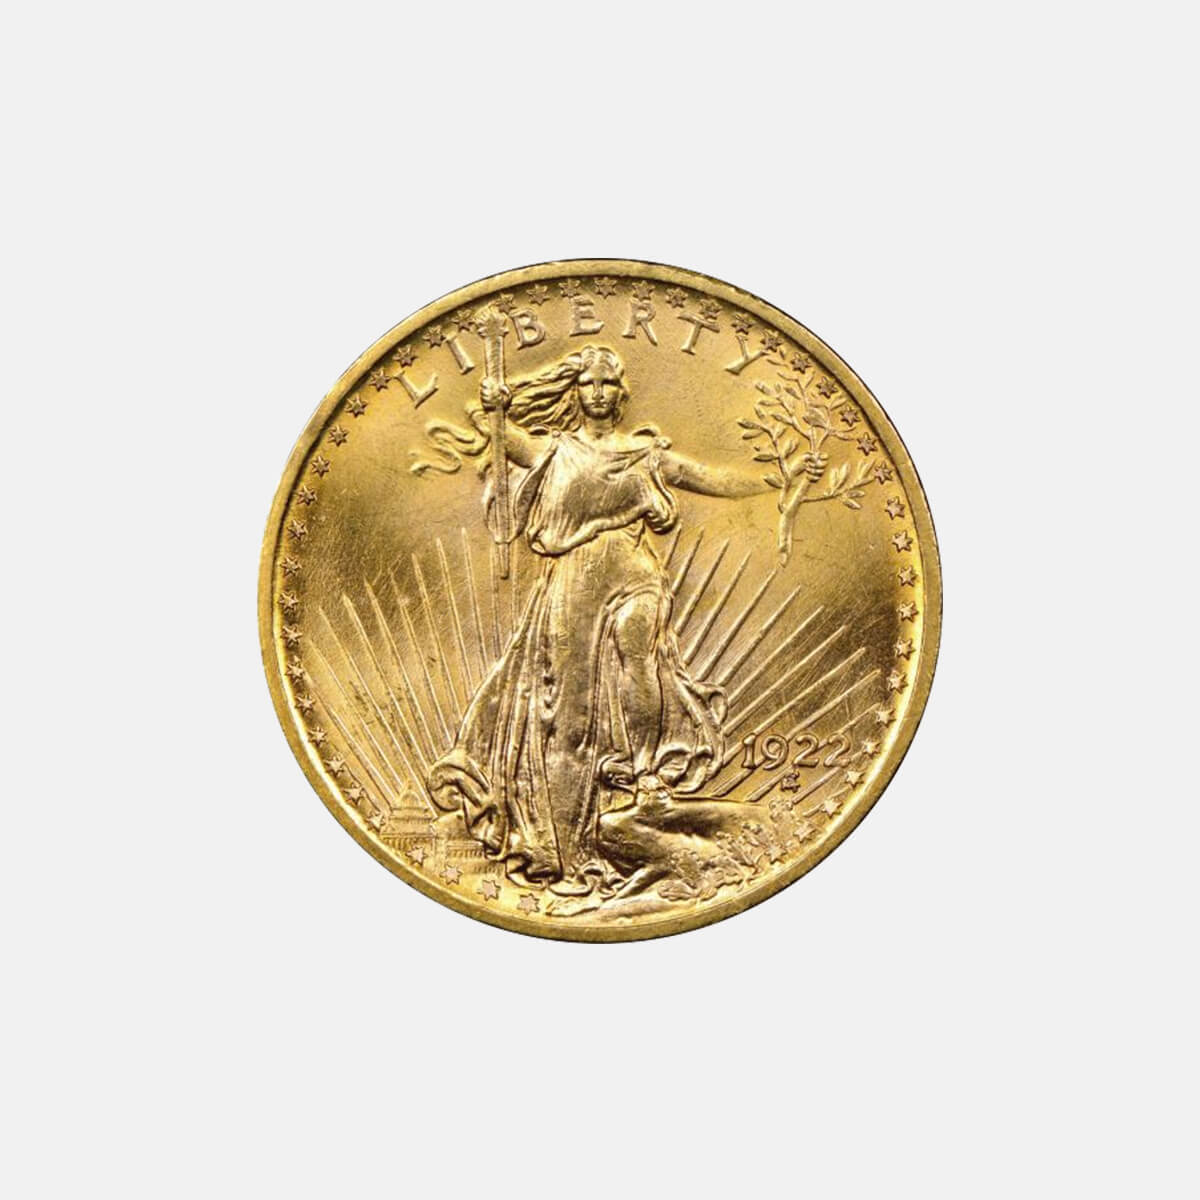 St. Gauden's Double Eagle Coin